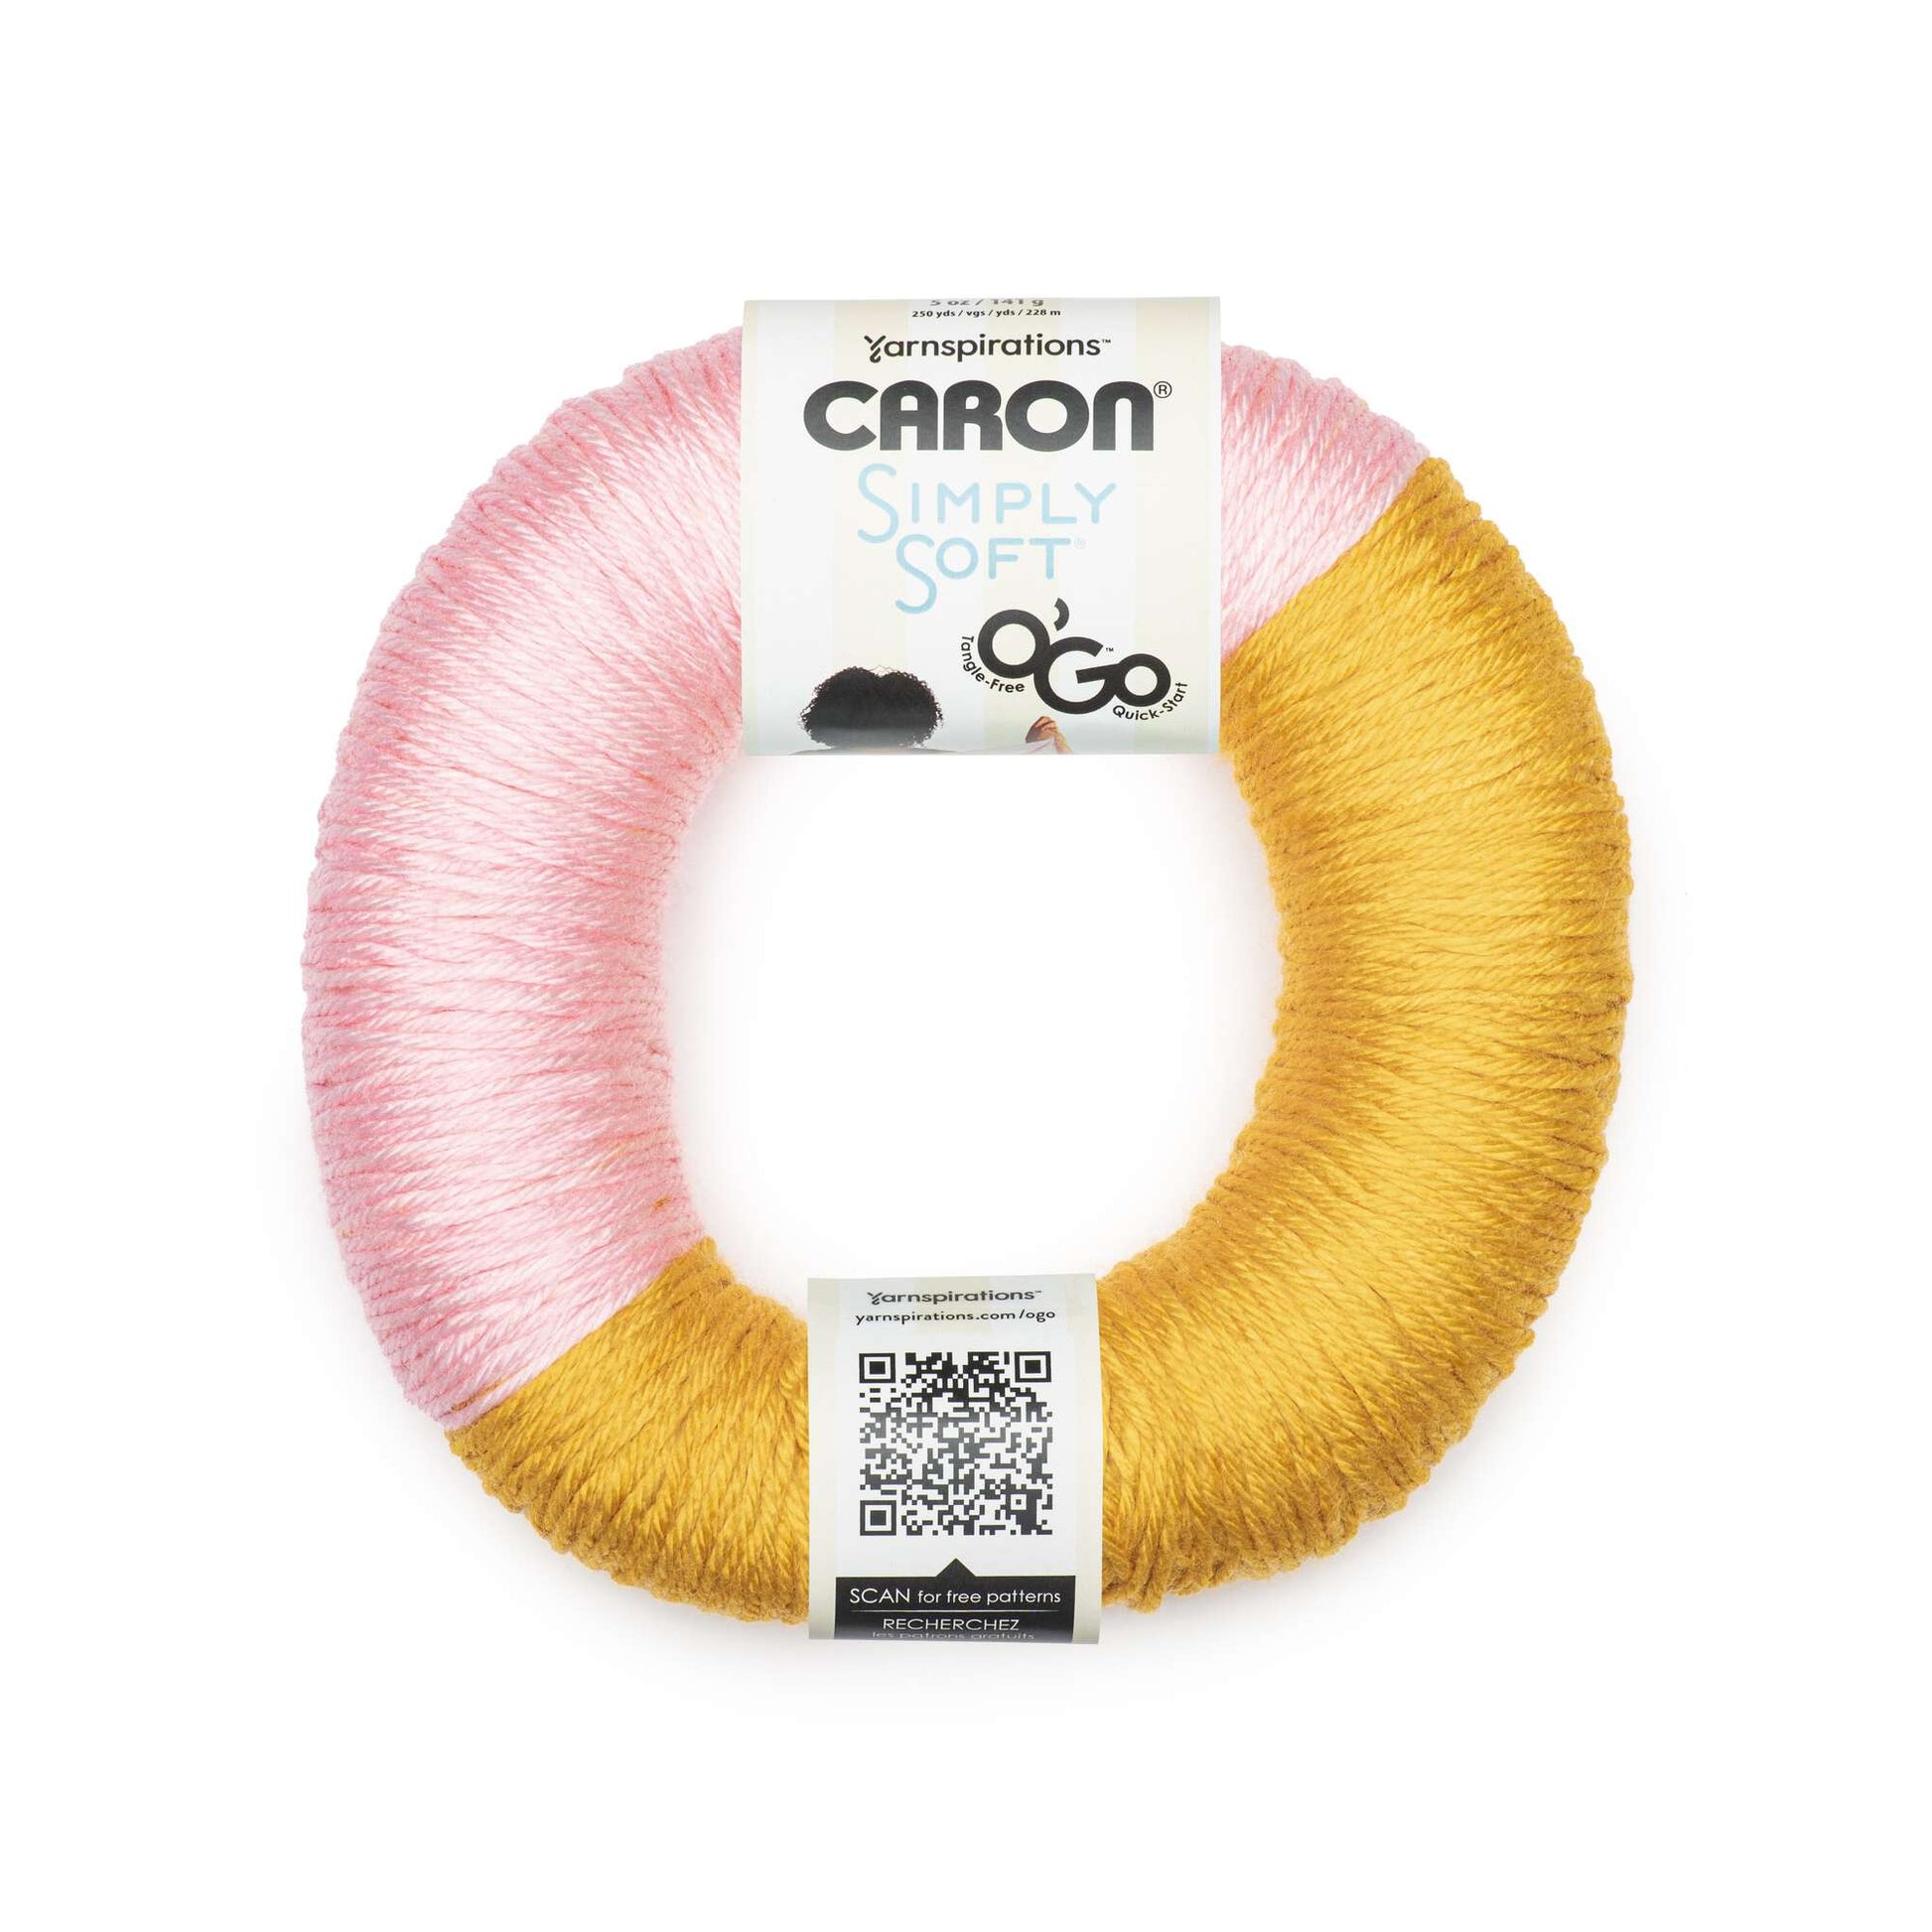 Clearance Sale GALAXY Caron Simply Soft Speckle 5oz / 235yds 141g / 215m  100% Acrylic Yarn. Item 29496161014 -  Sweden